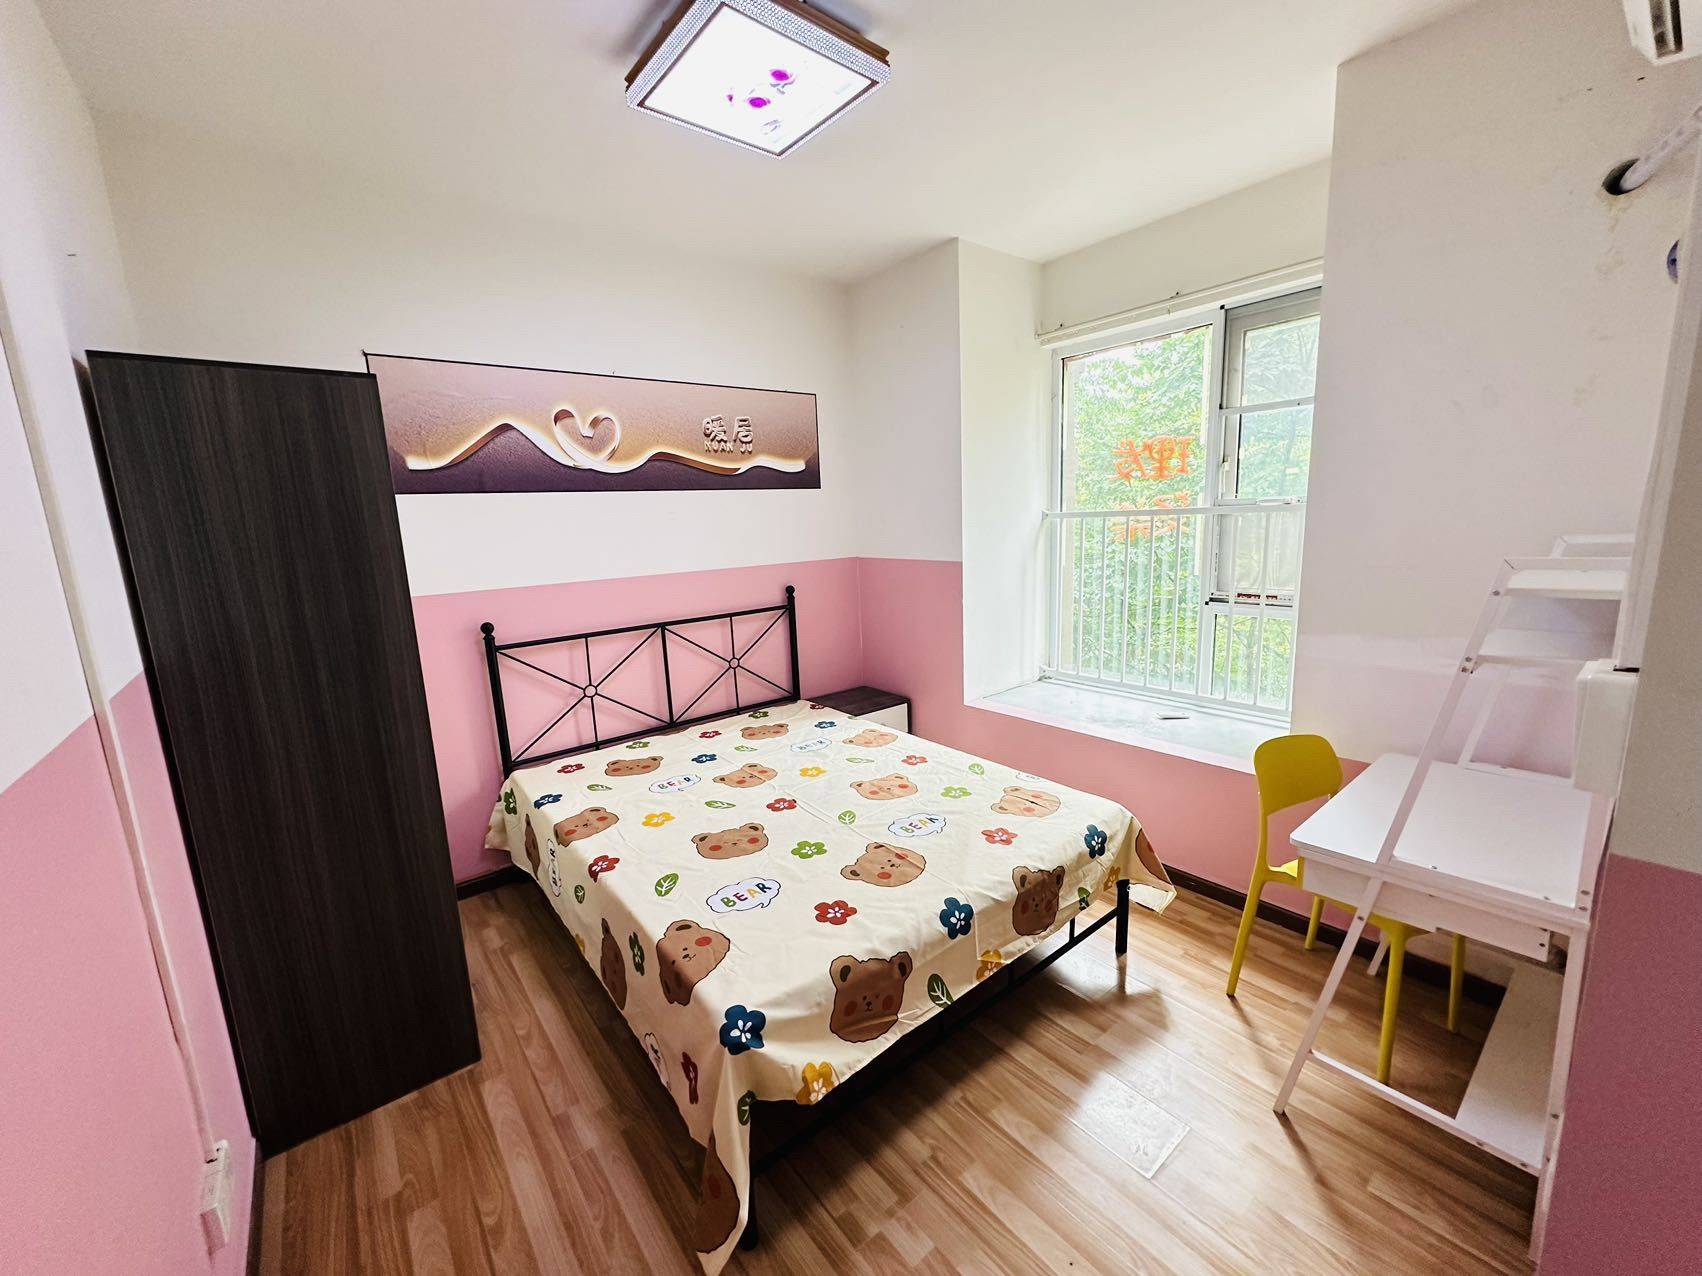 Wuhan-Hongshan-Cozy Home,Clean&Comfy,No Gender Limit,Pet Friendly